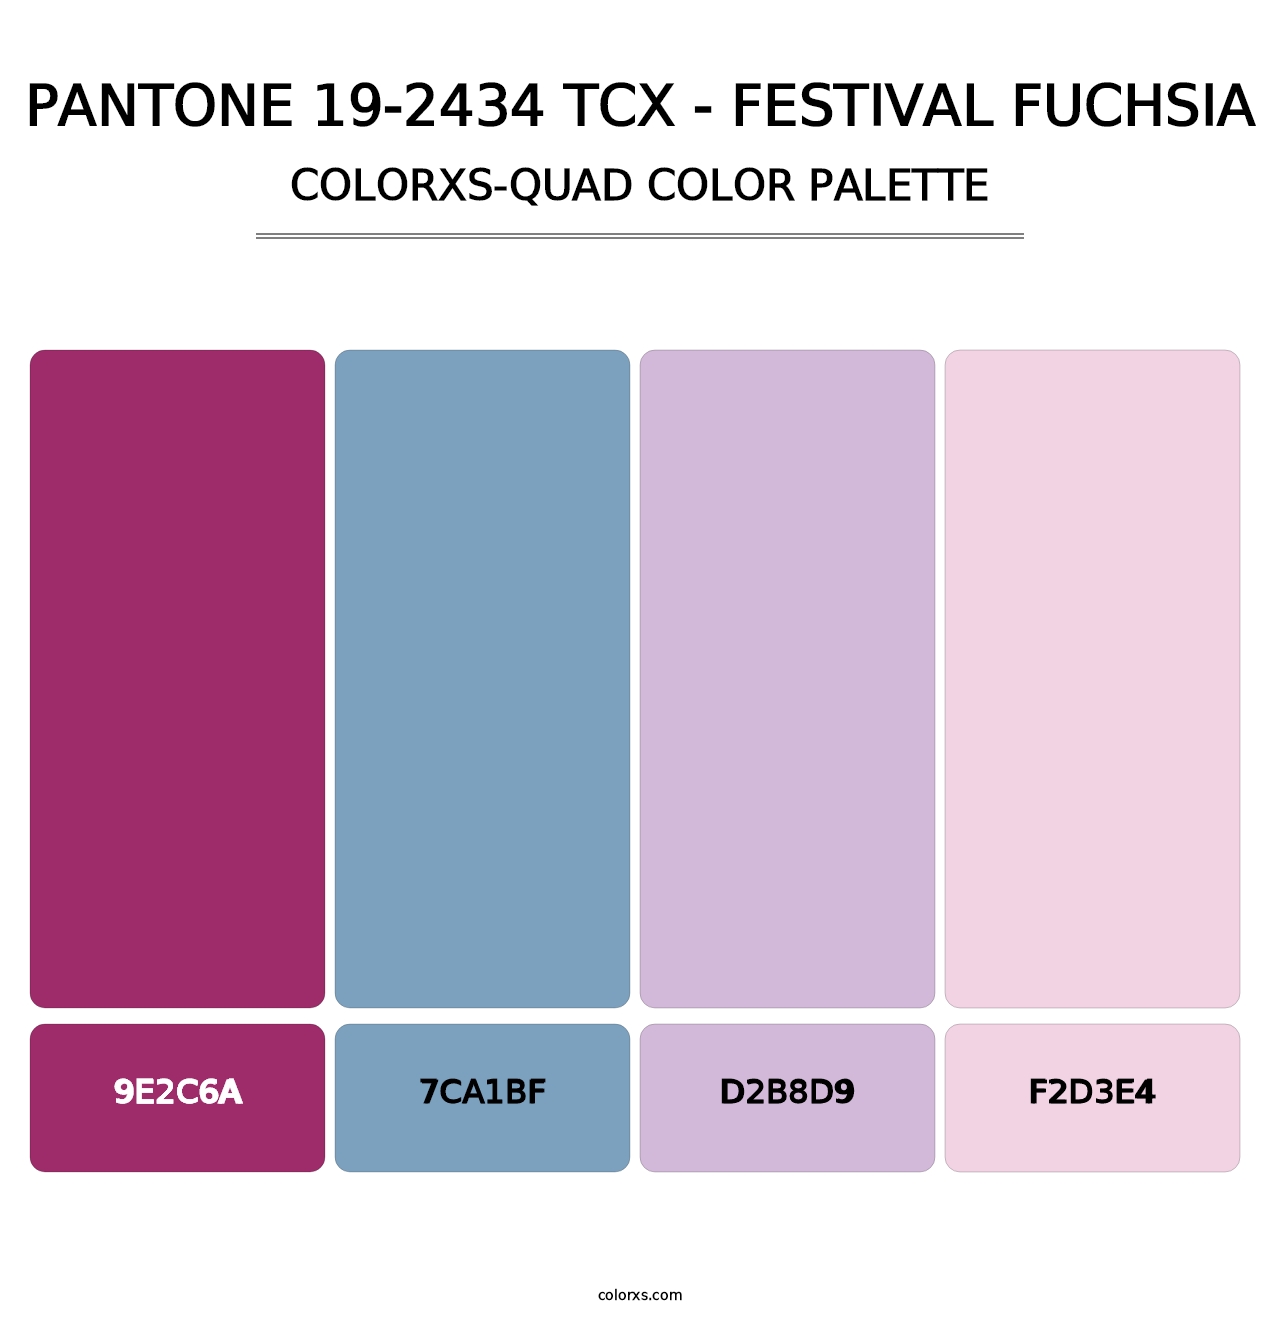 PANTONE 19-2434 TCX - Festival Fuchsia - Colorxs Quad Palette